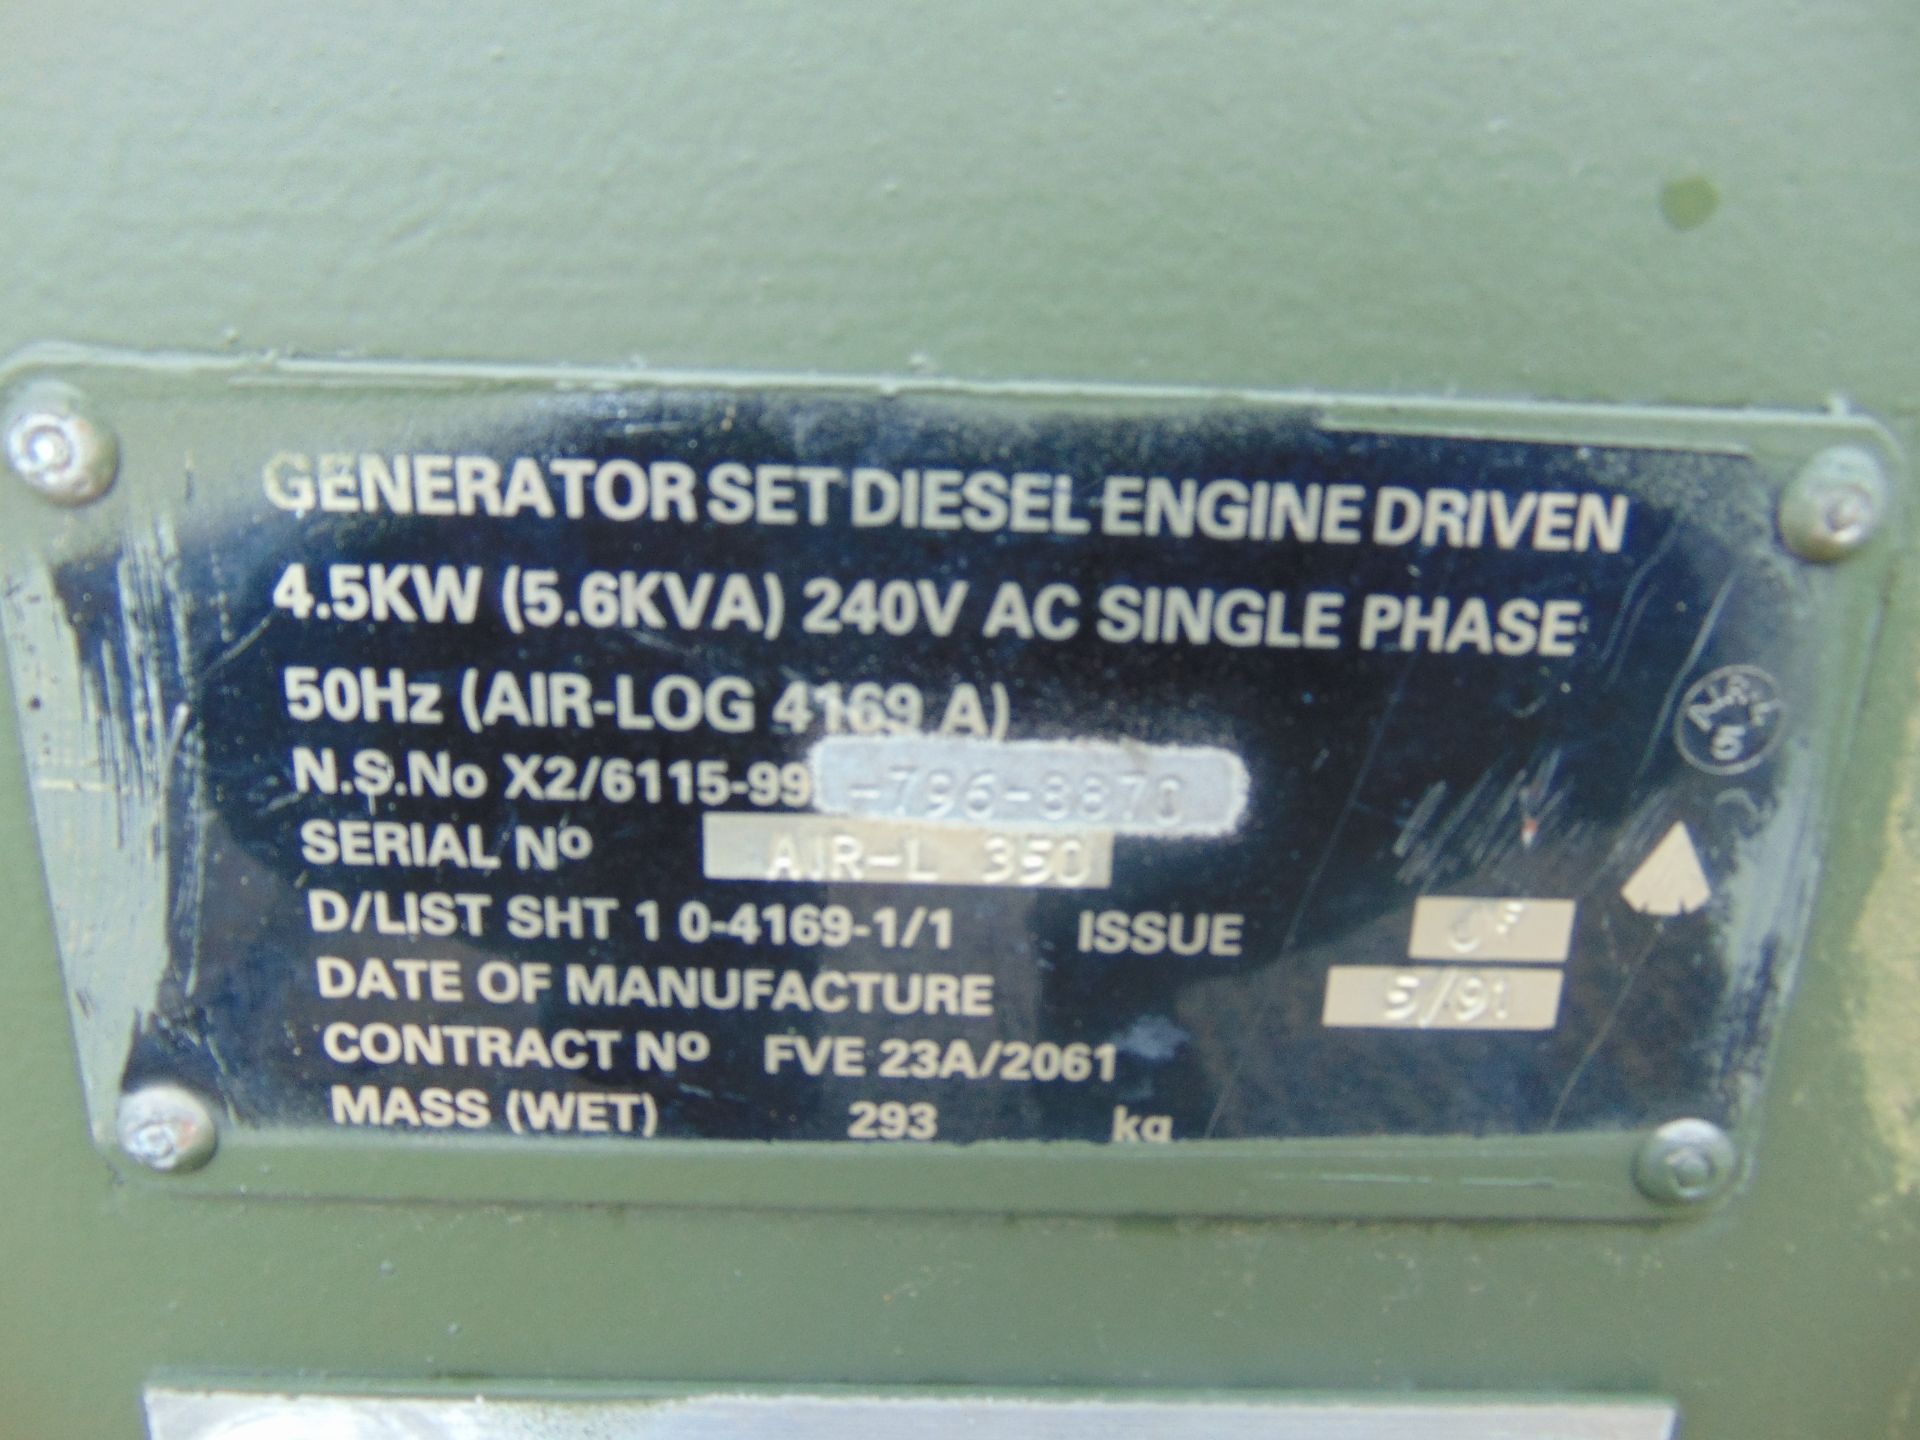 Lister Petter Air Log 4169 A 5.6 KVA Diesel Generator - Bild 13 aus 17